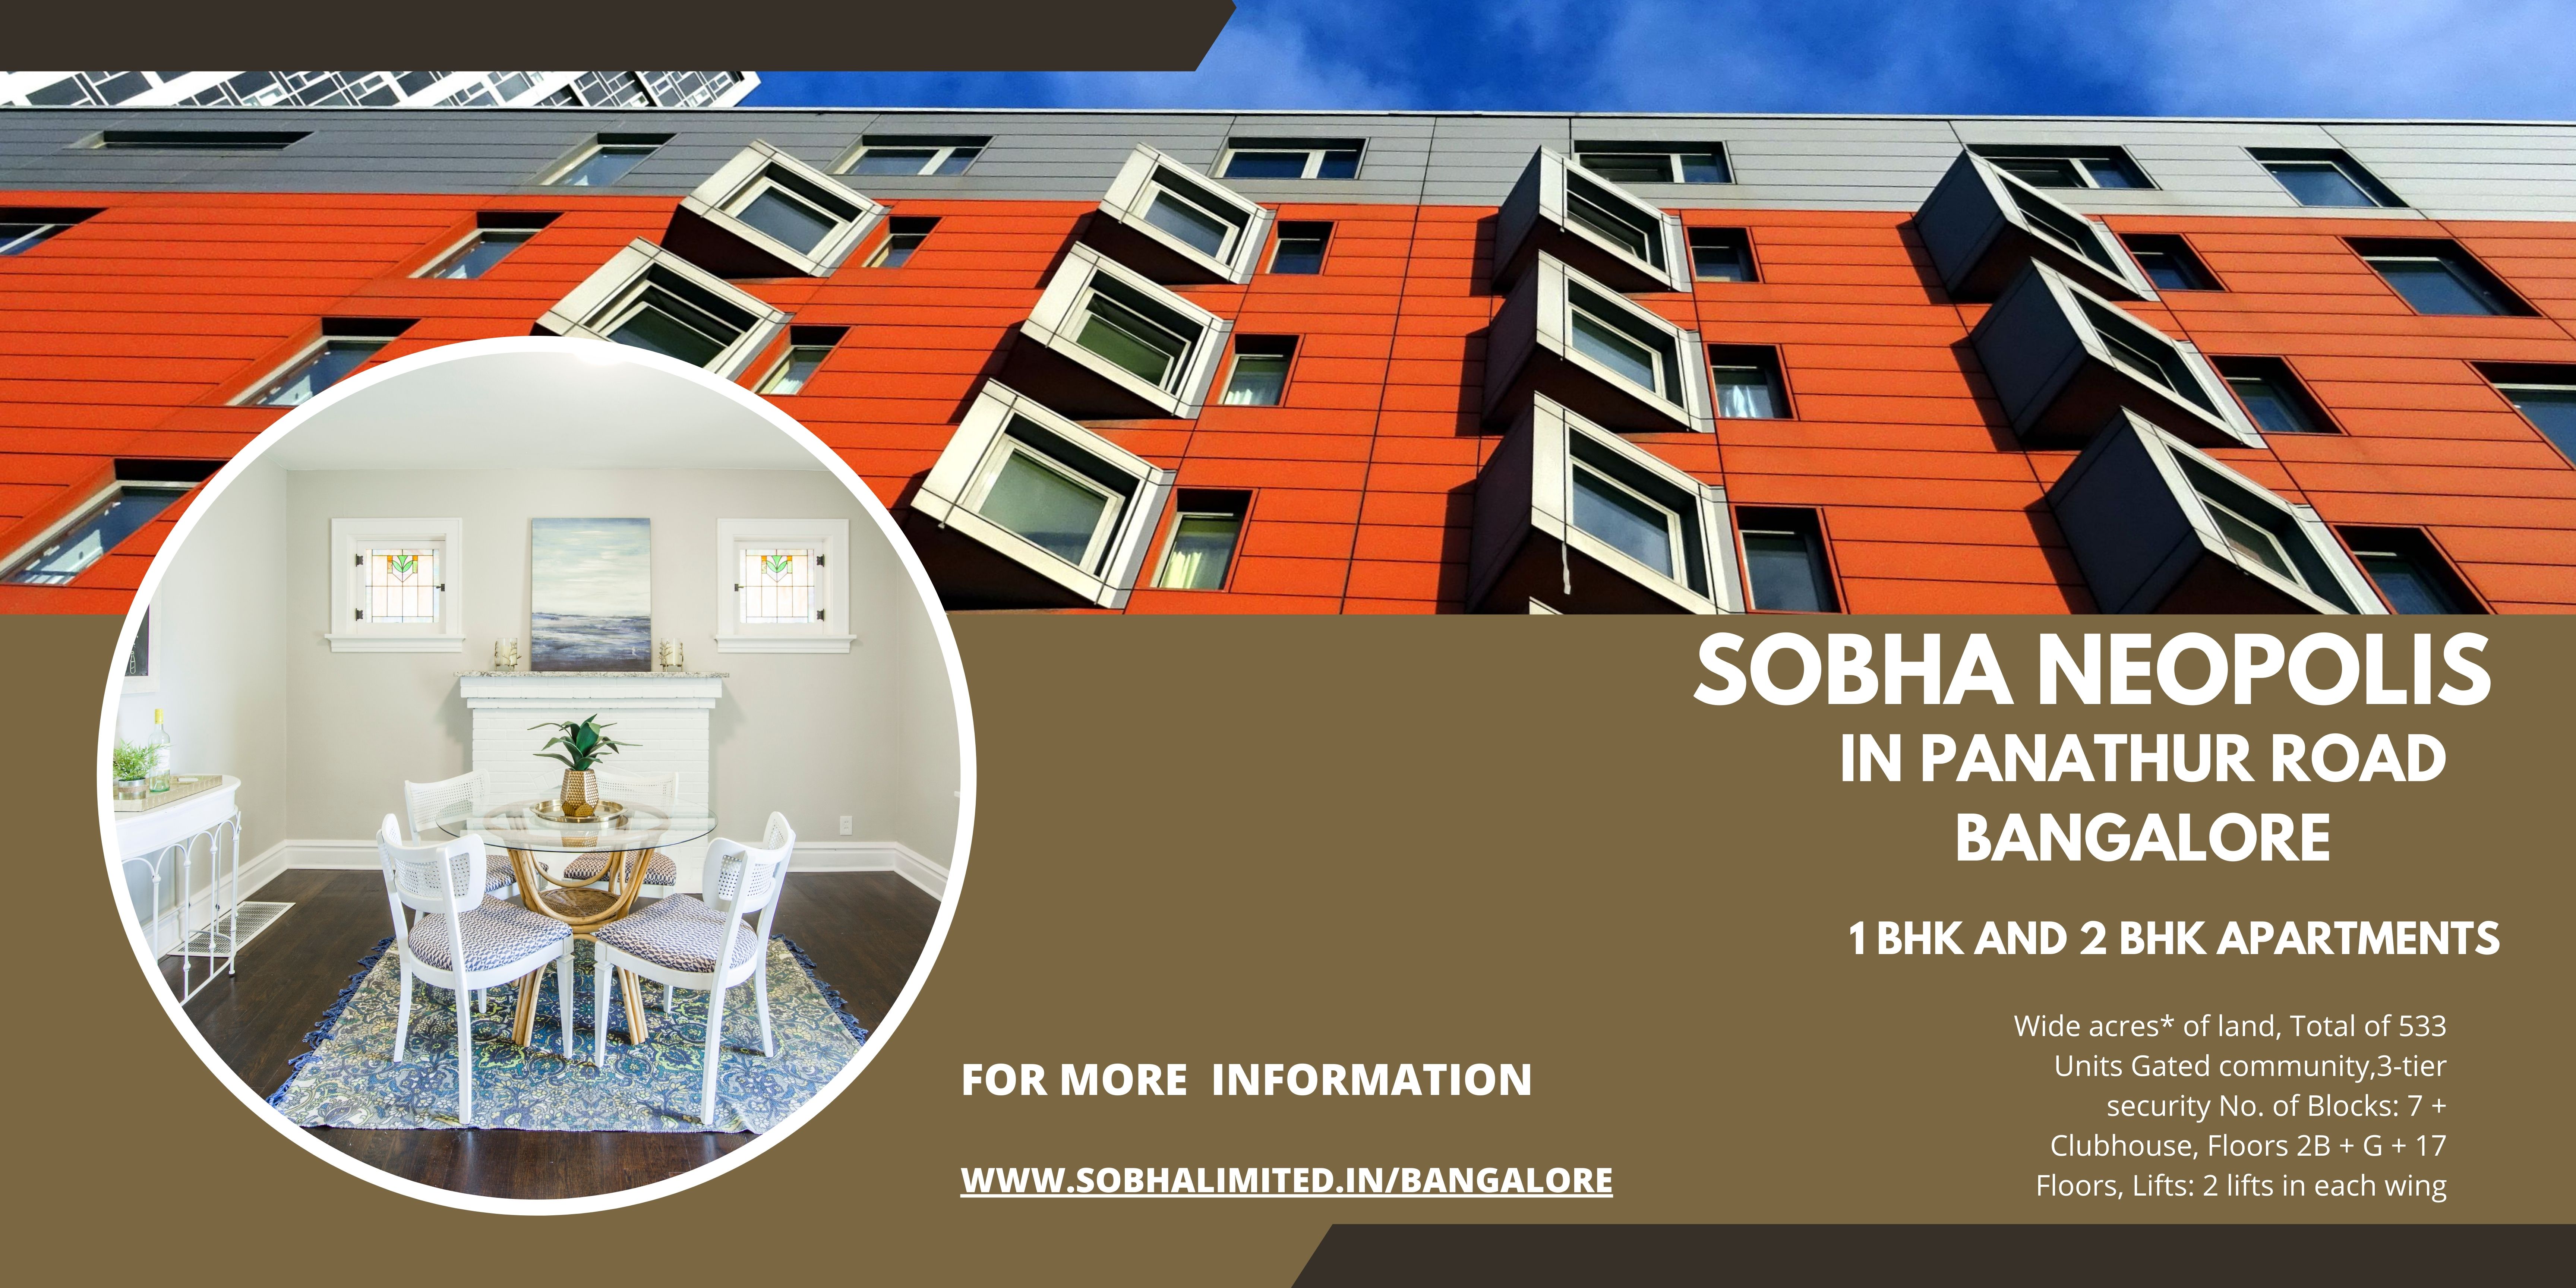 Sobha Neopolis In Panathur Road Bangalore | Your New Address for an Elite Lifestyle